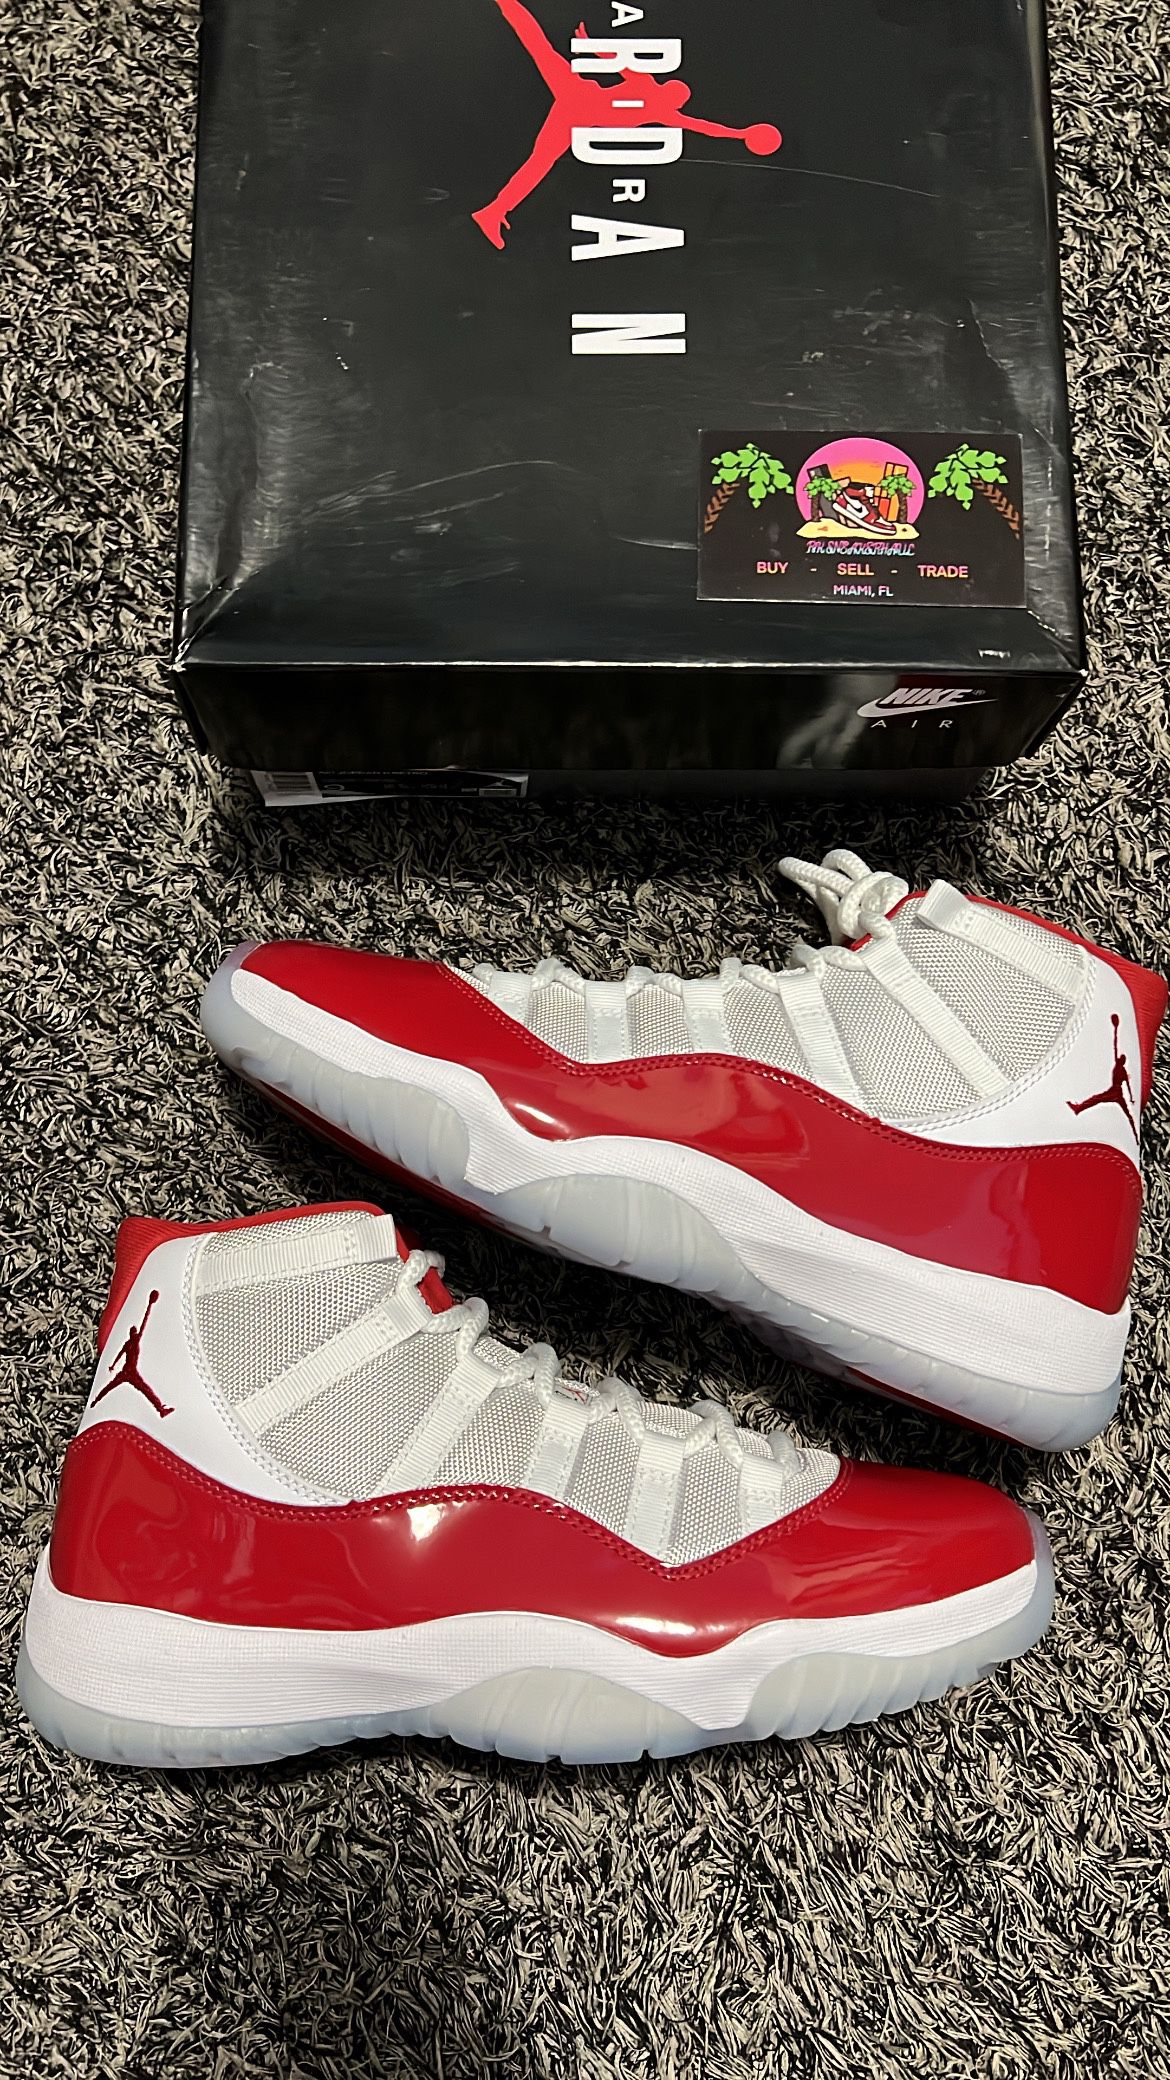 Jordan 11 Retro Cherry (BRAND NEW) Size 9